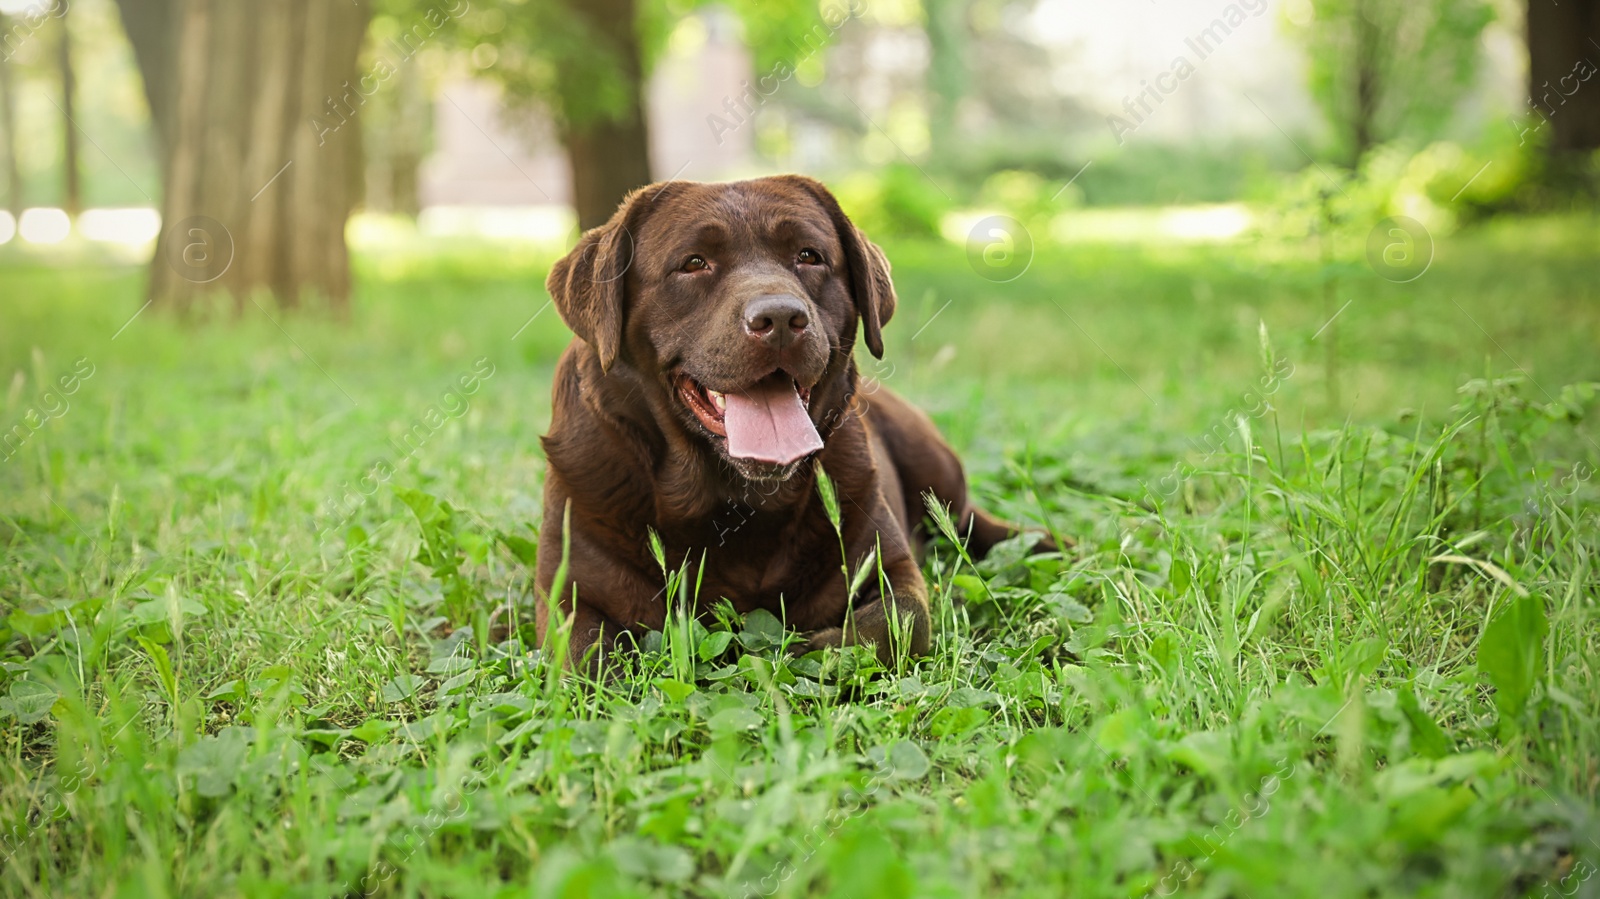 Photo of Cute Chocolate Labrador Retriever dog lying on green grass in park